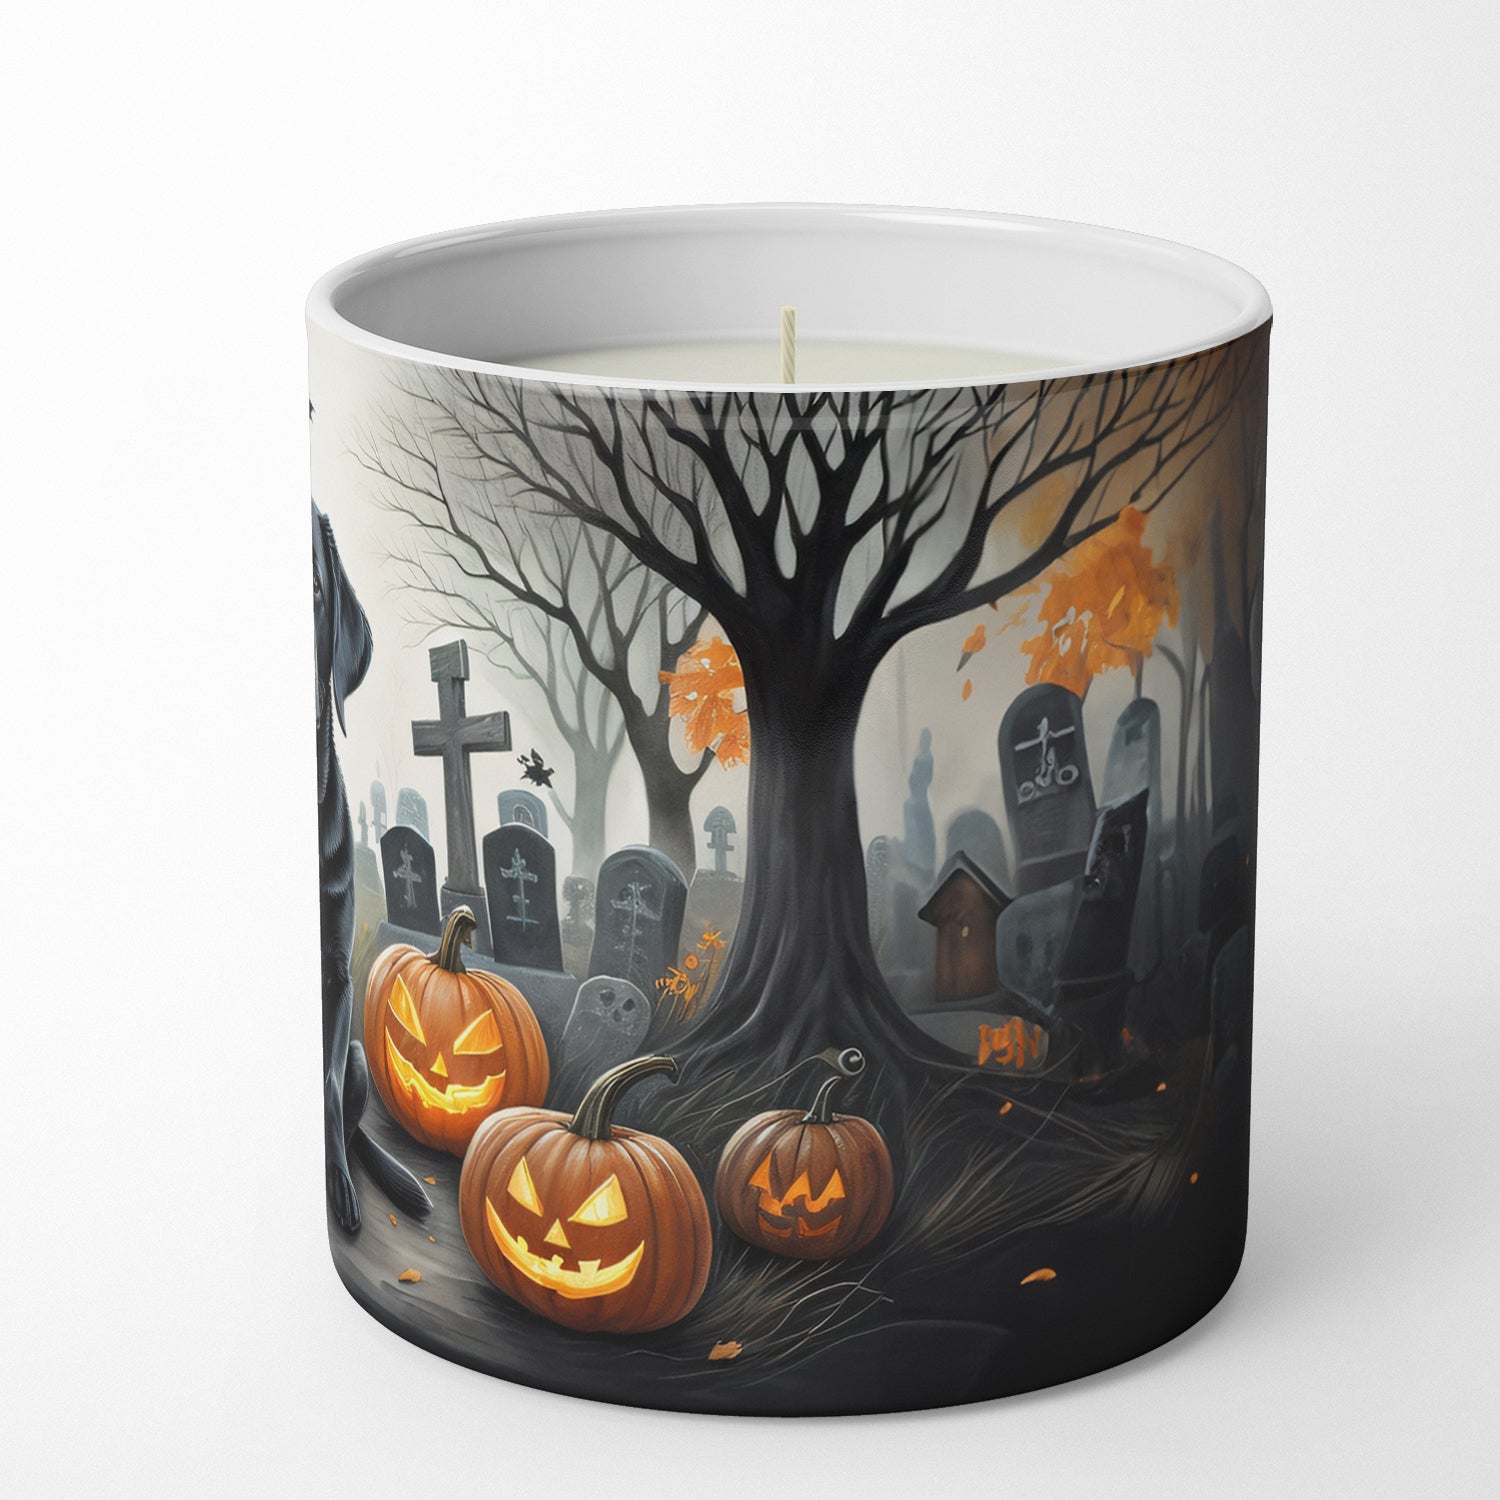 Black Labrador Retriever Spooky Halloween Decorative Soy Candle